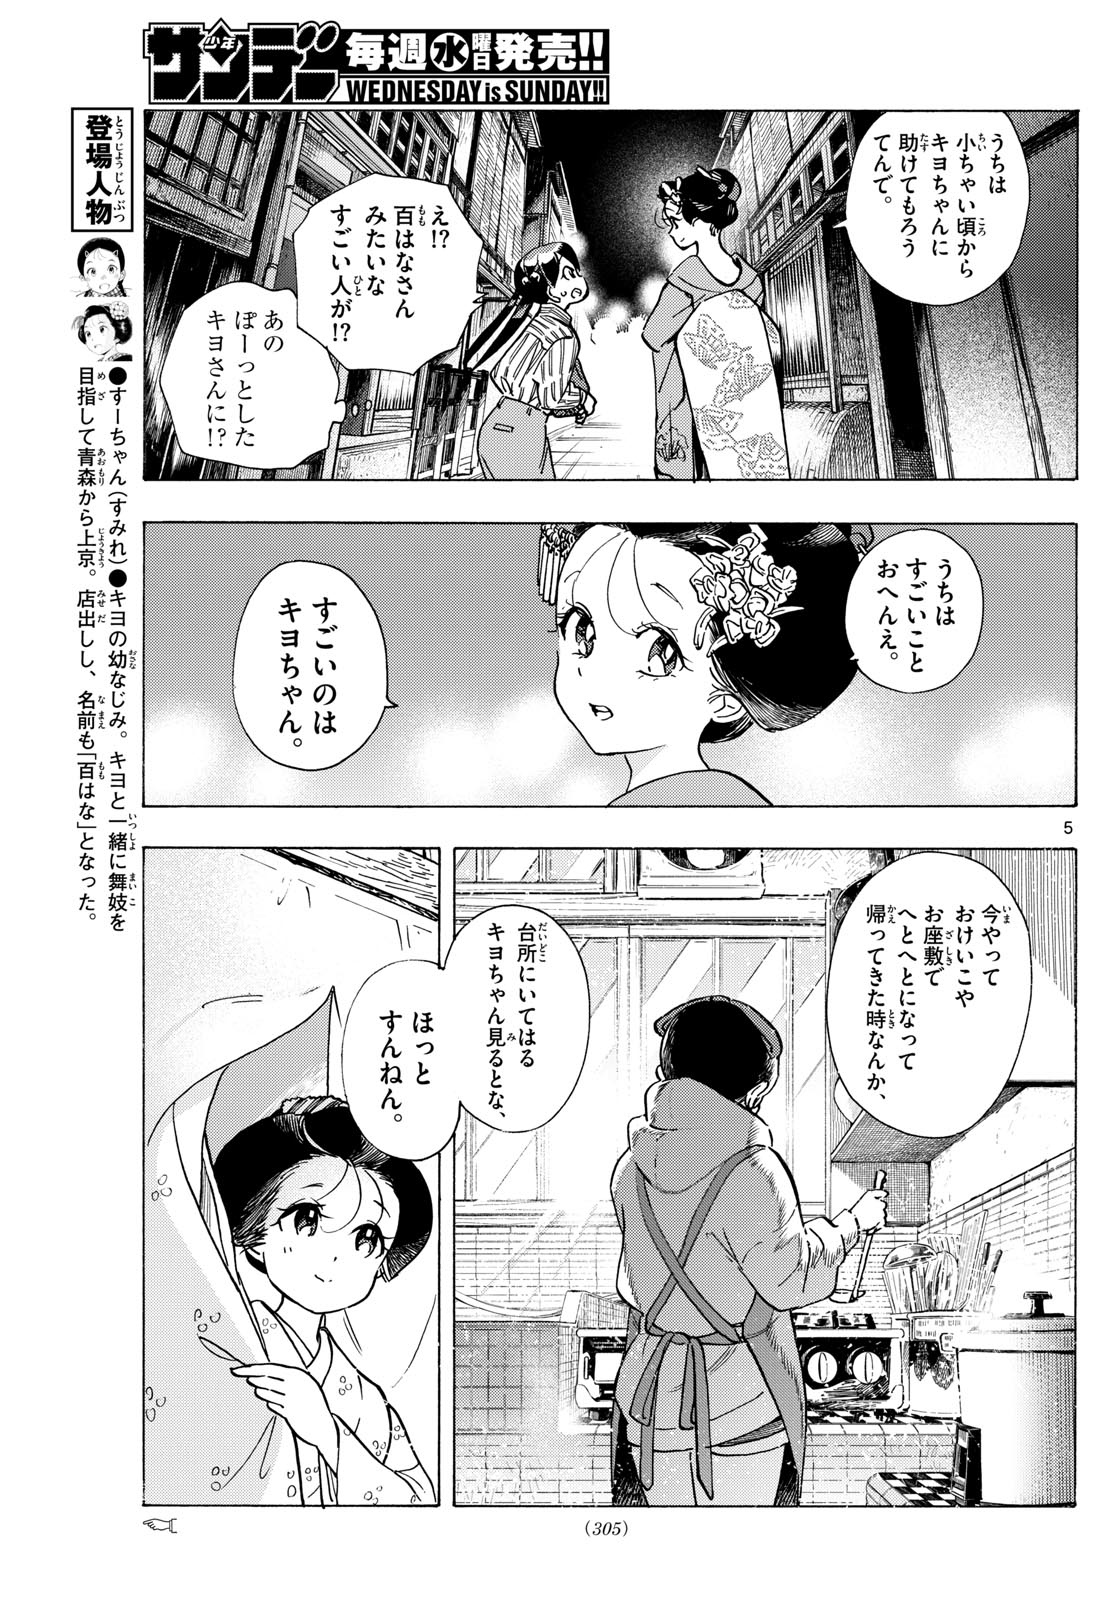 Maiko-san Chi no Makanai-san - Chapter 290 - Page 5